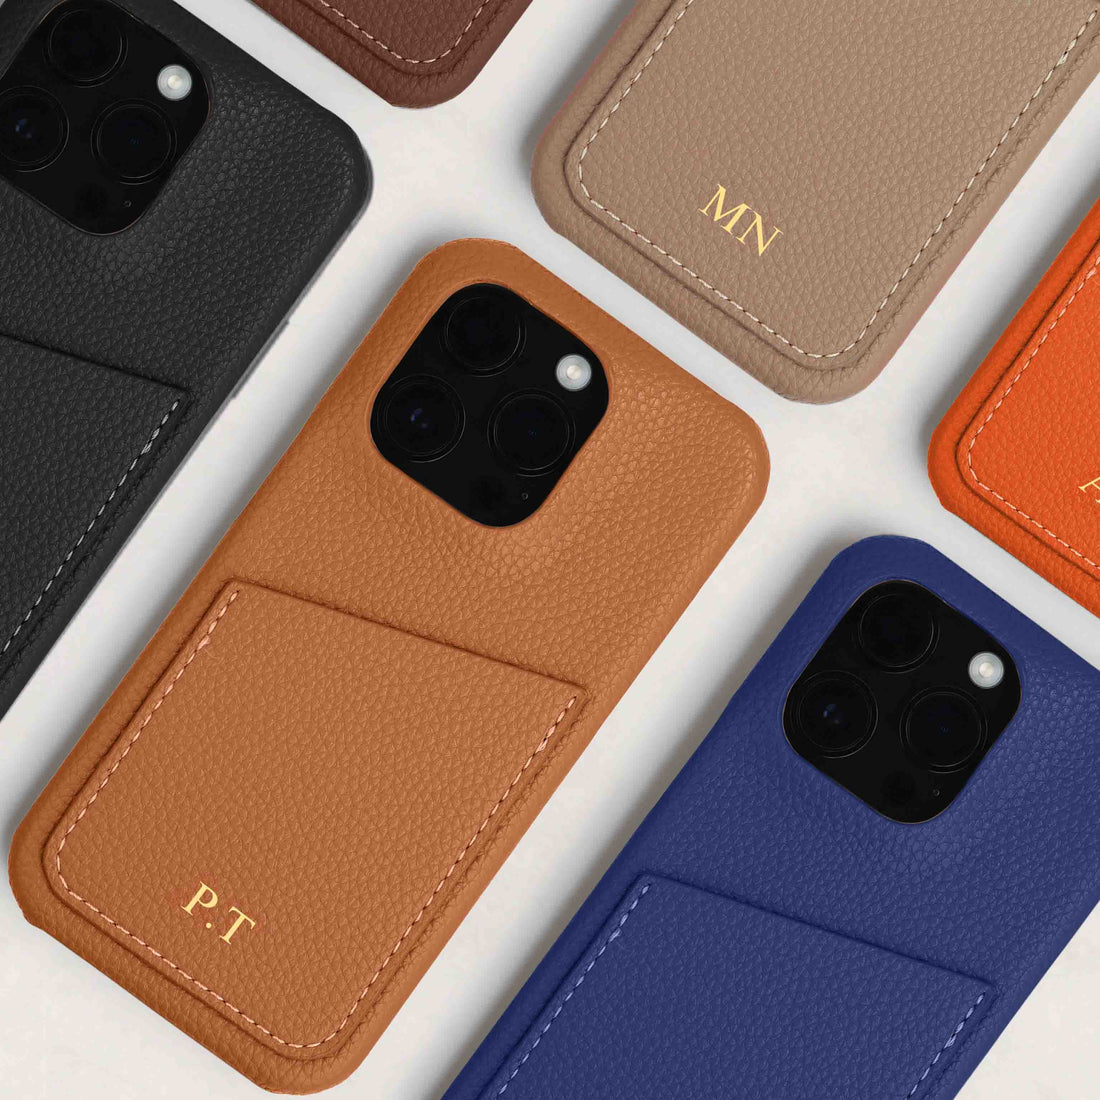 Dark Brown Card Holder Leather iPhone Case